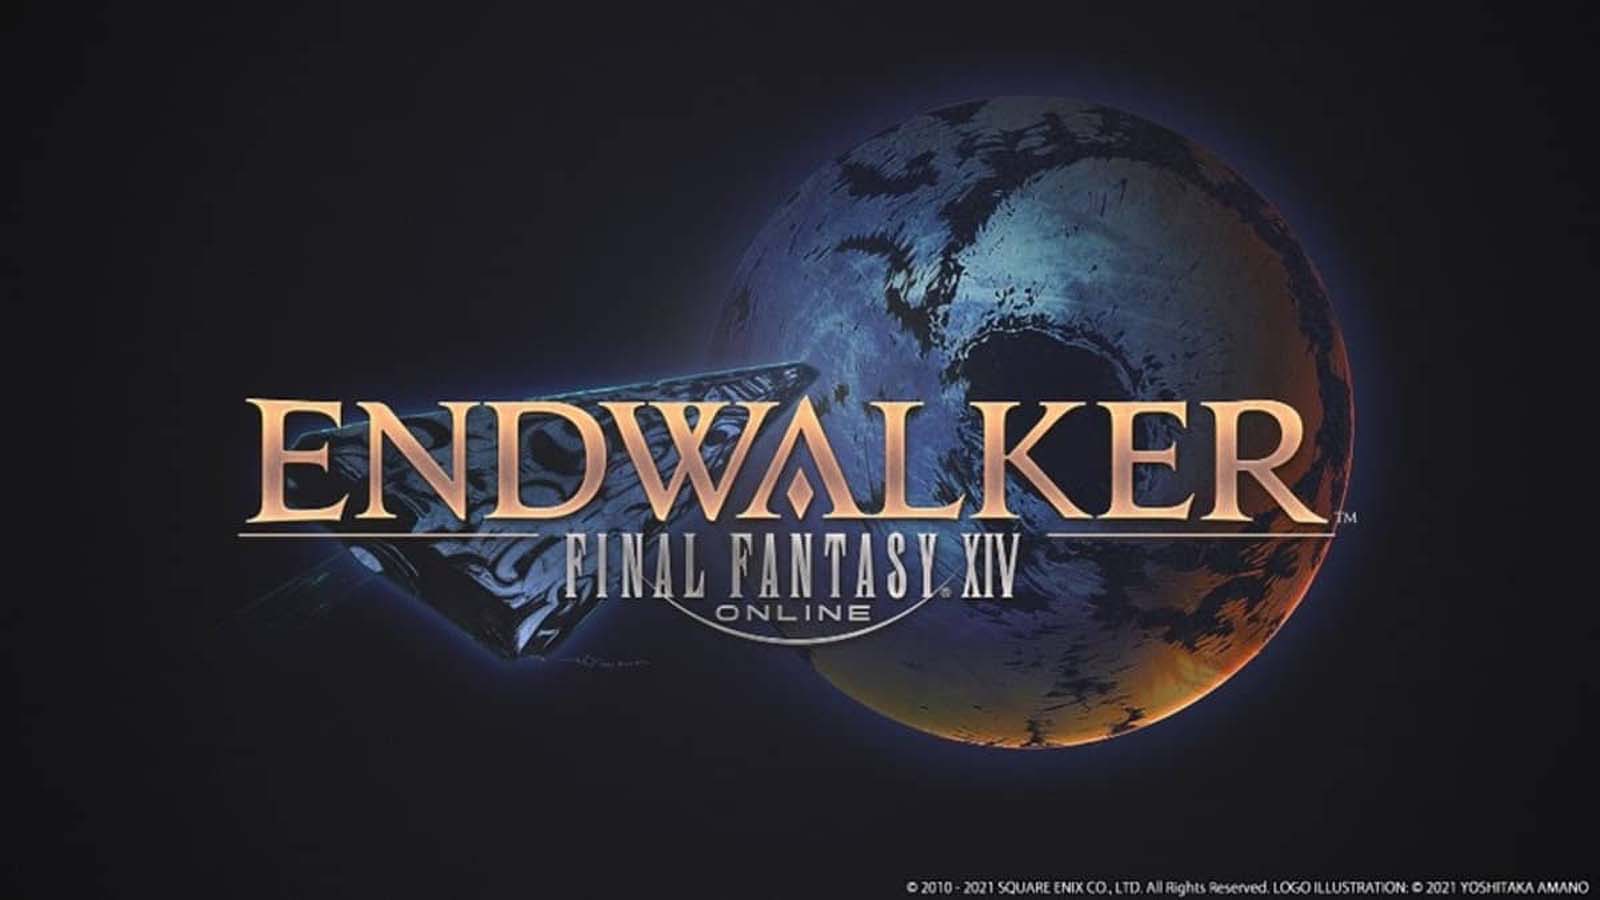 Final Fantasy Xiv Endwalker Announces New Release Date